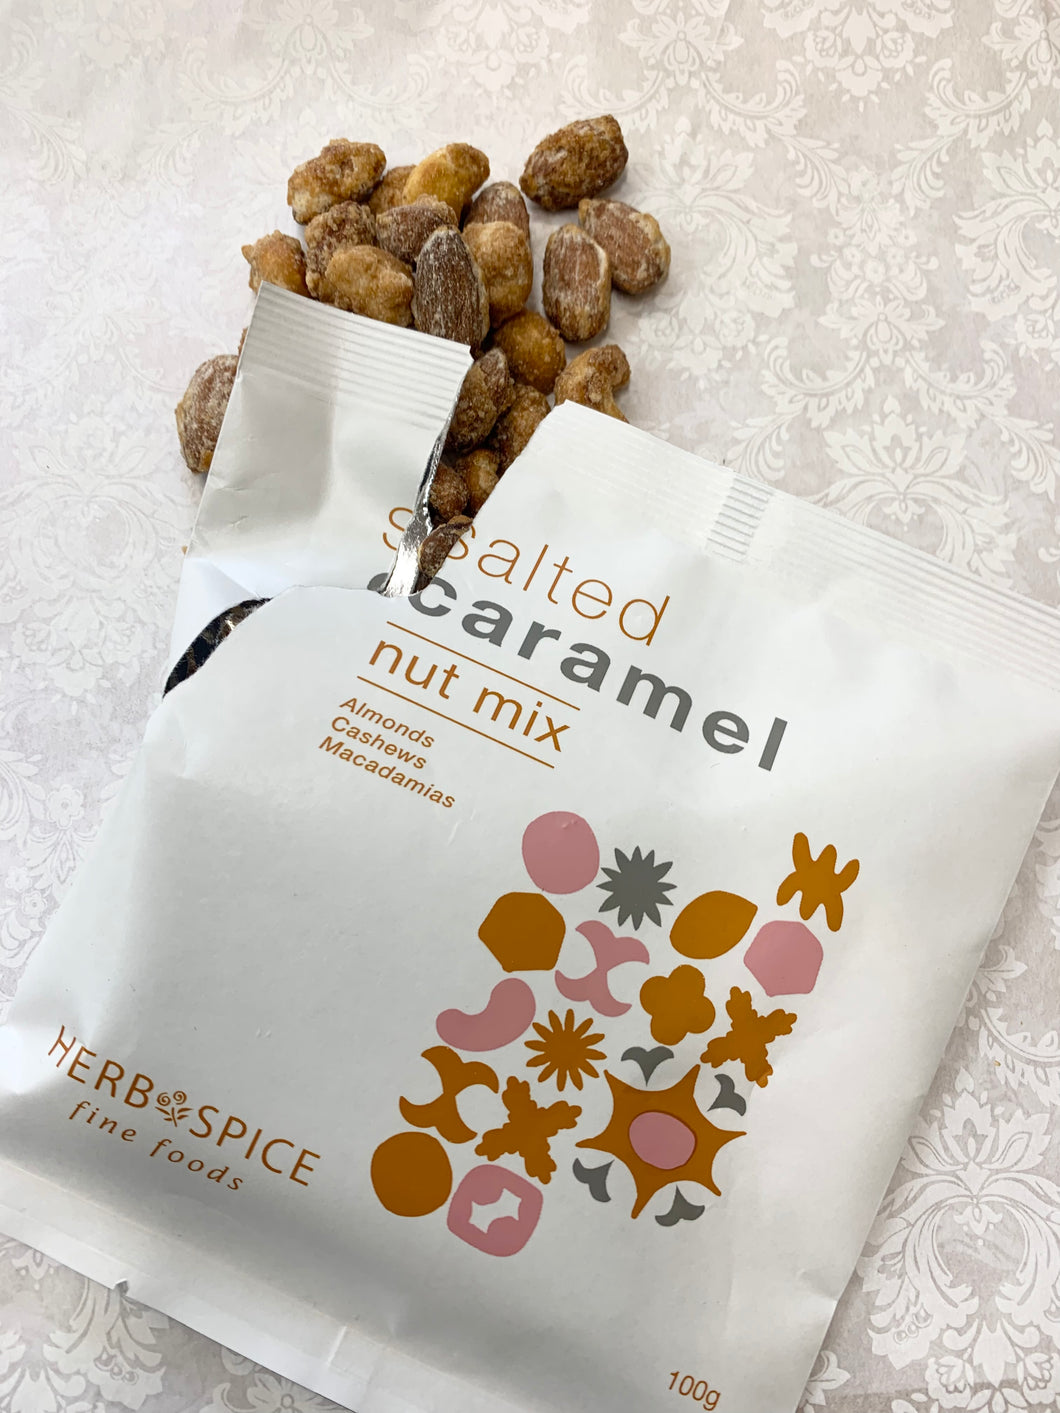 Salted Caramel Nut Mix